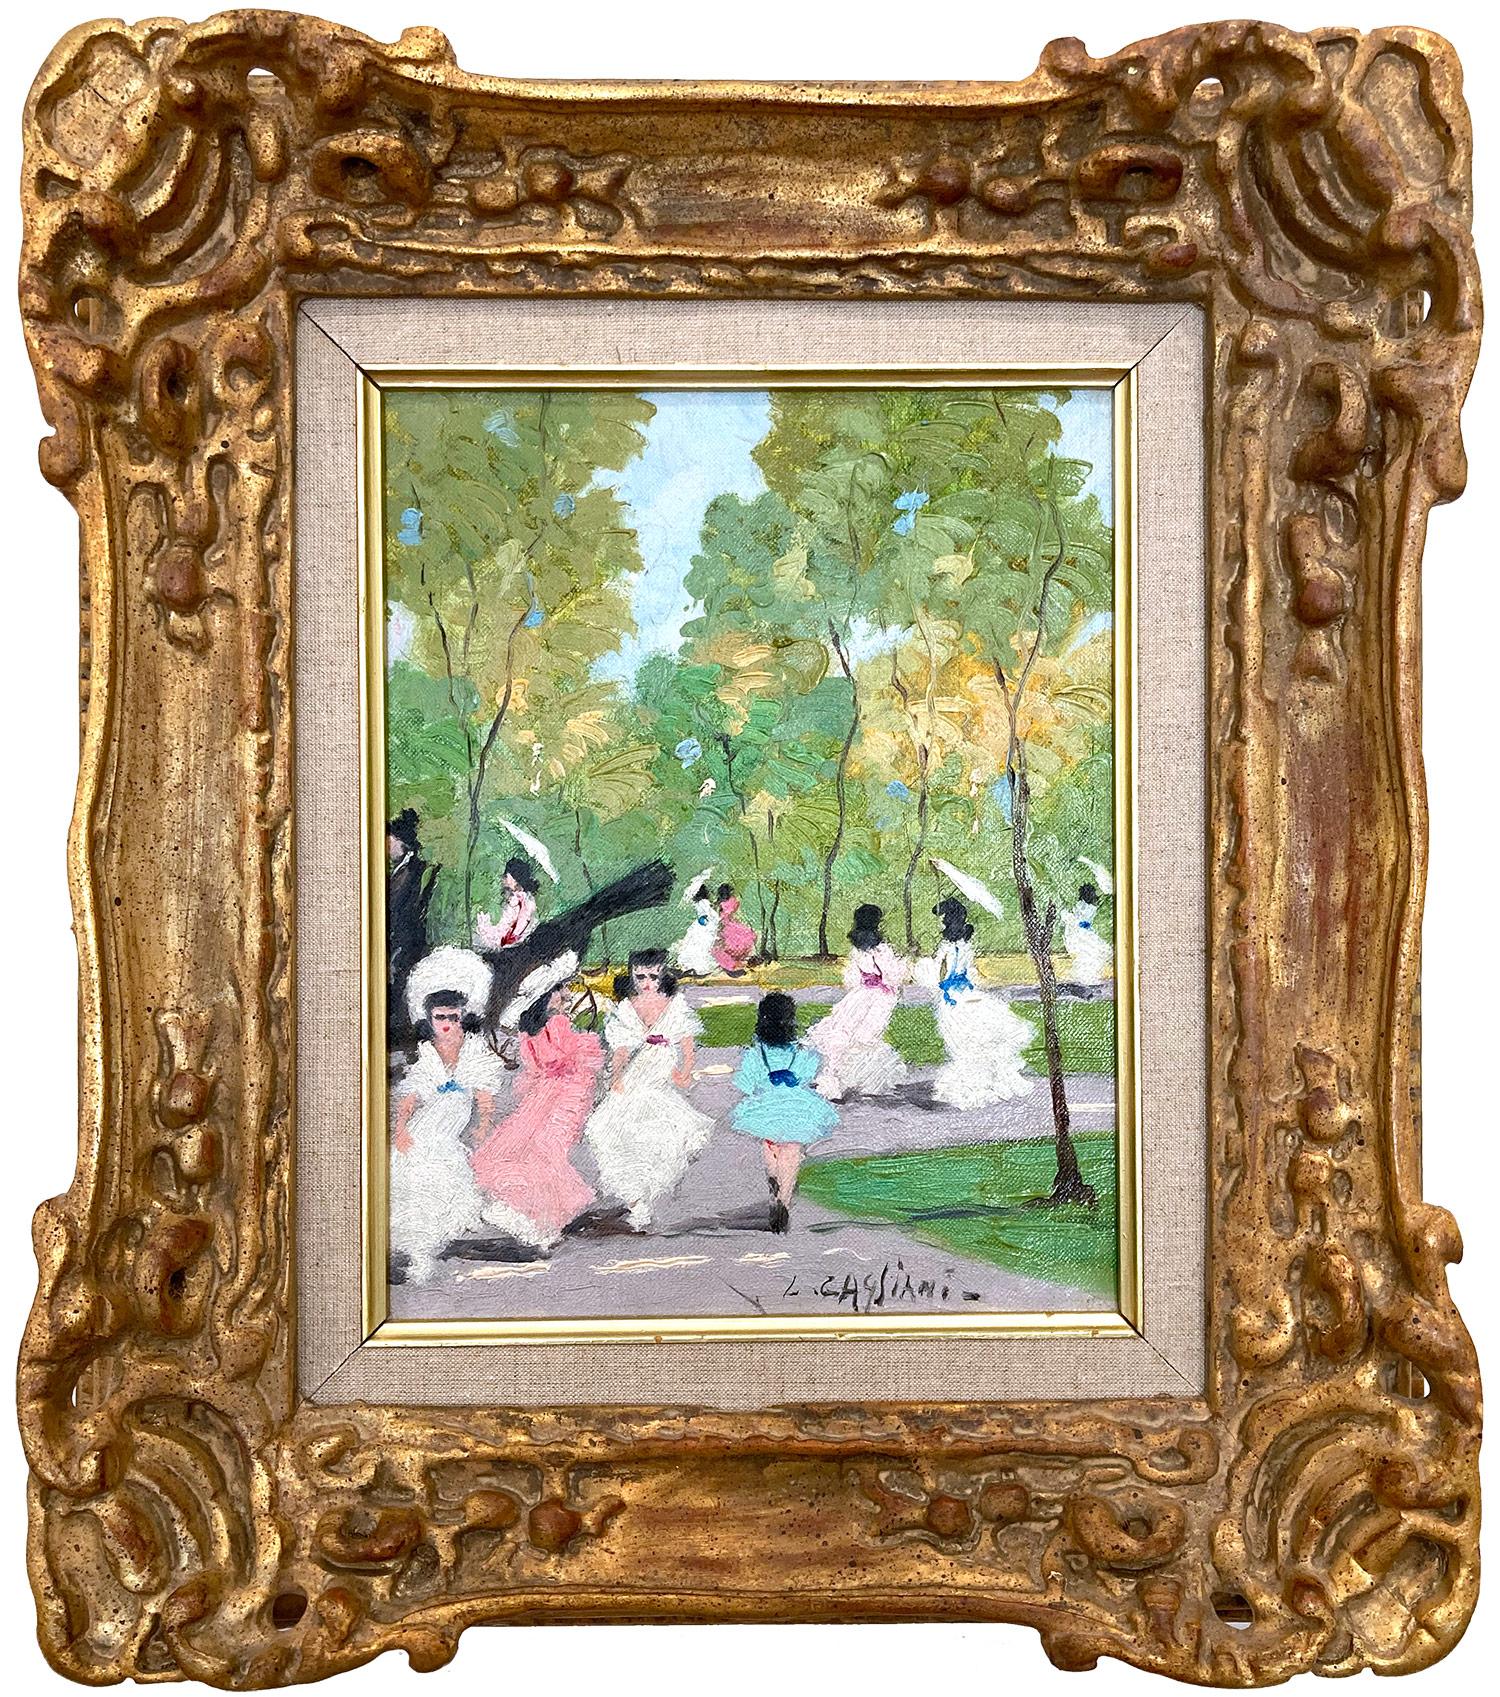 Luigi Cagliani Figurative Painting - "Parisian Spring Park Scene with Figures" Impressionist Oil on Canvas Painting